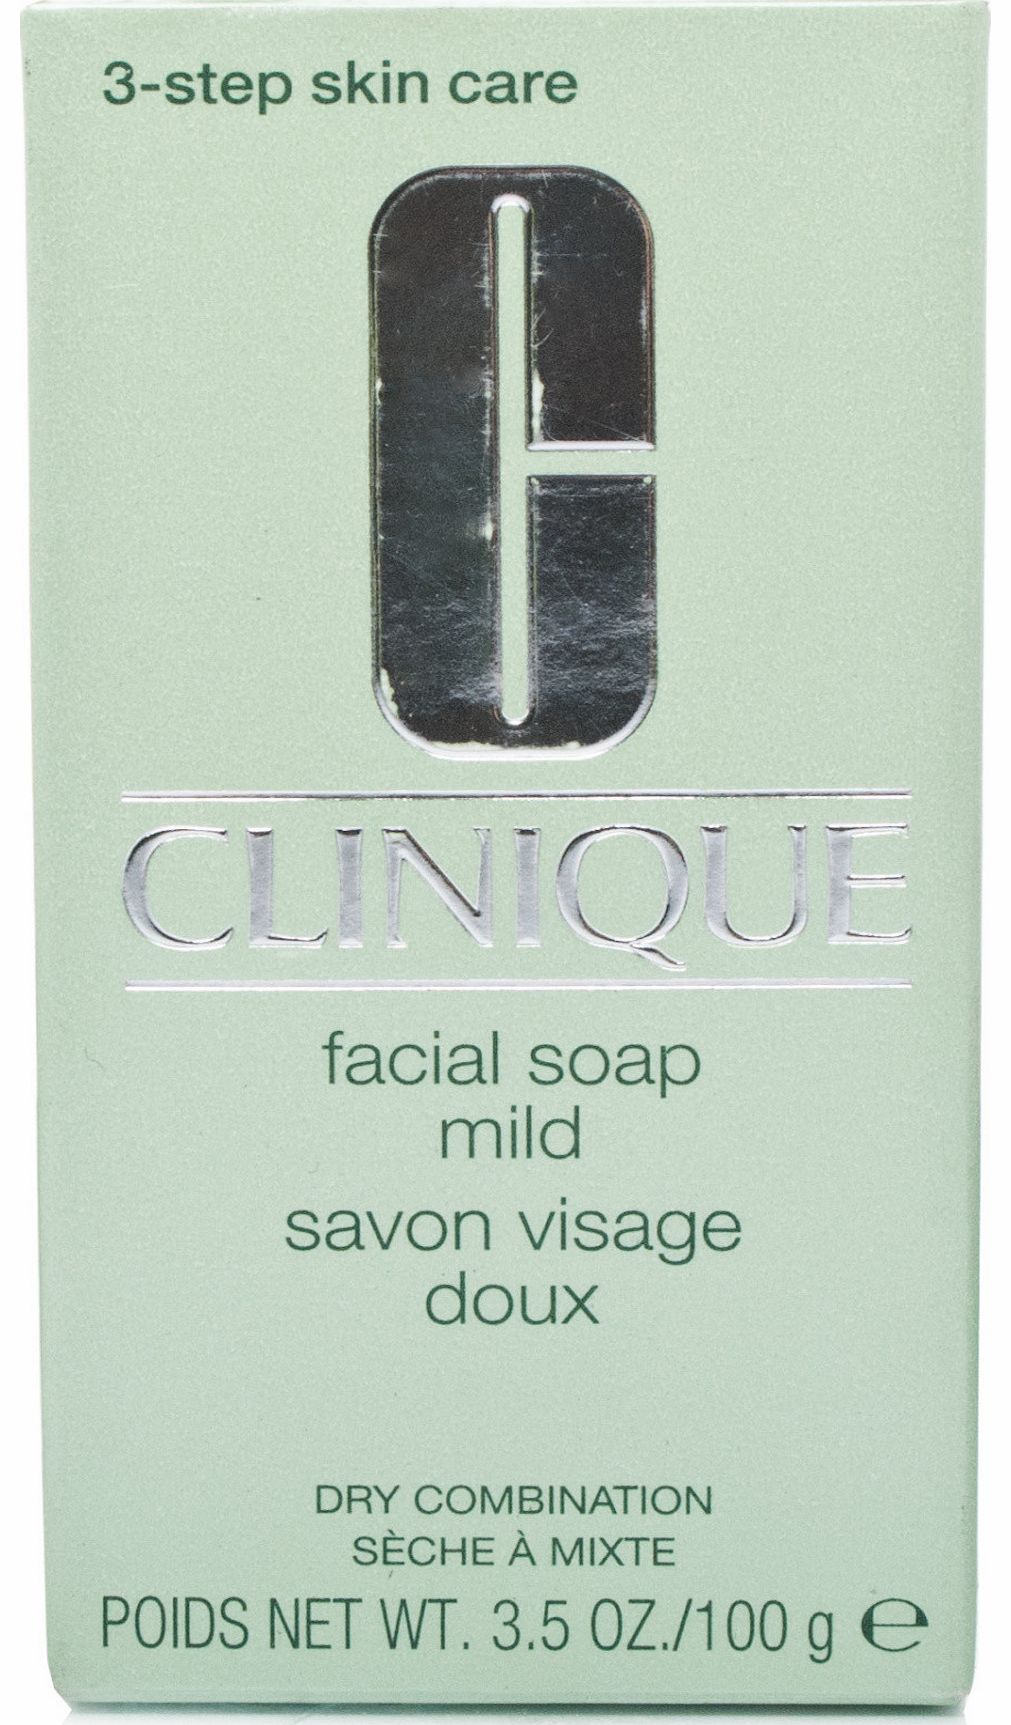 Facial Soap Mild (without dish)